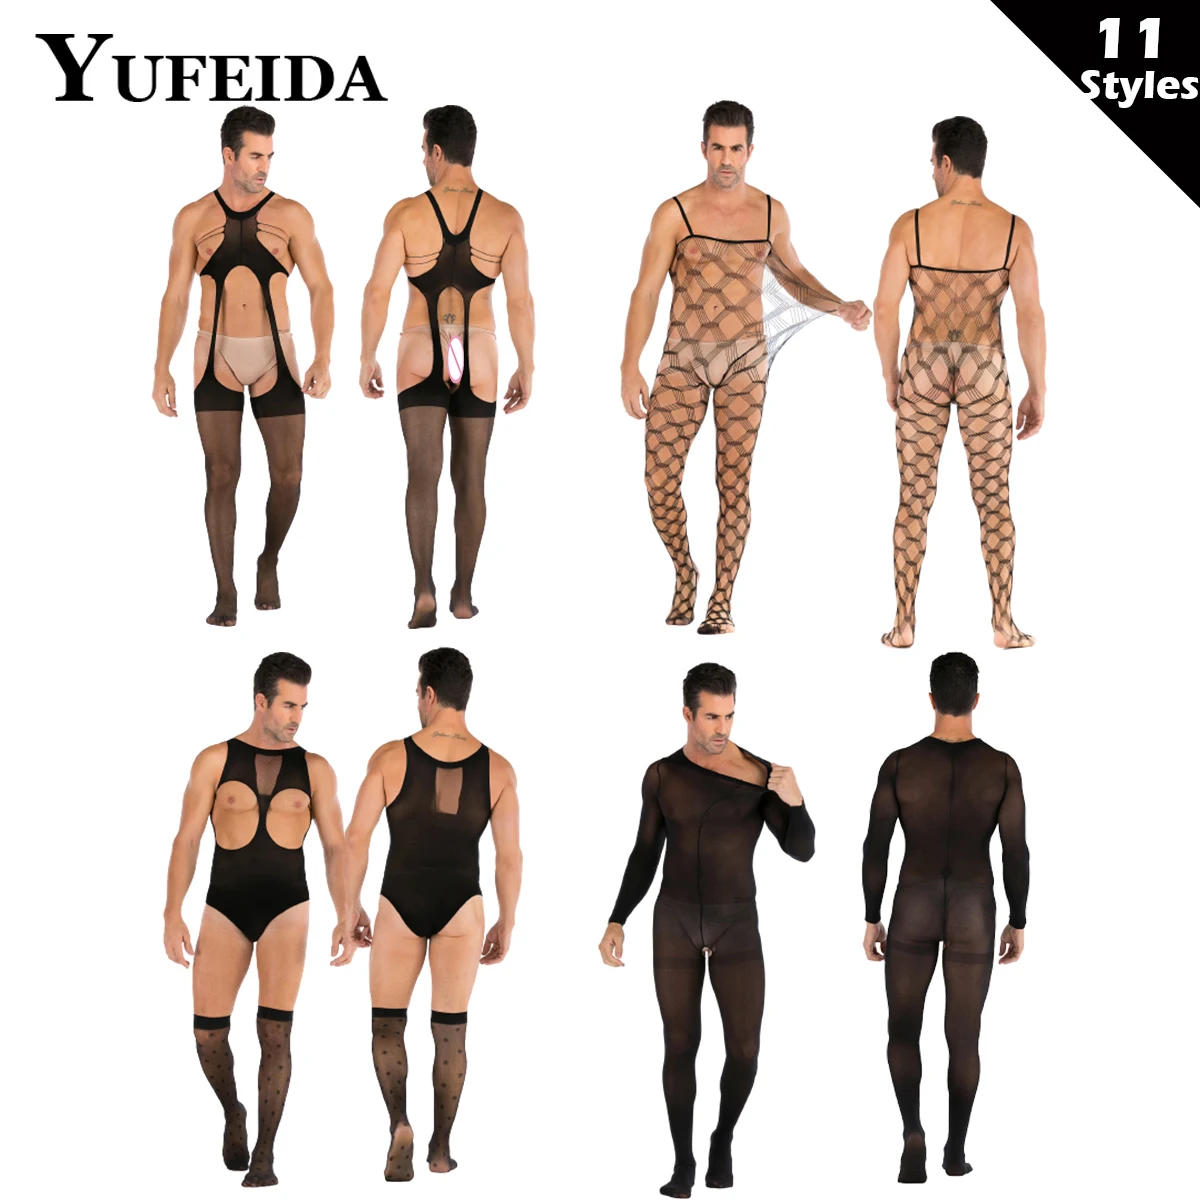 

YUFEIDA Mens See Through Sheer Bodystocking Sexy Crotchless Stretchy Body Pantyhose Tights Full BodyStockings Nightgown Bodysuit